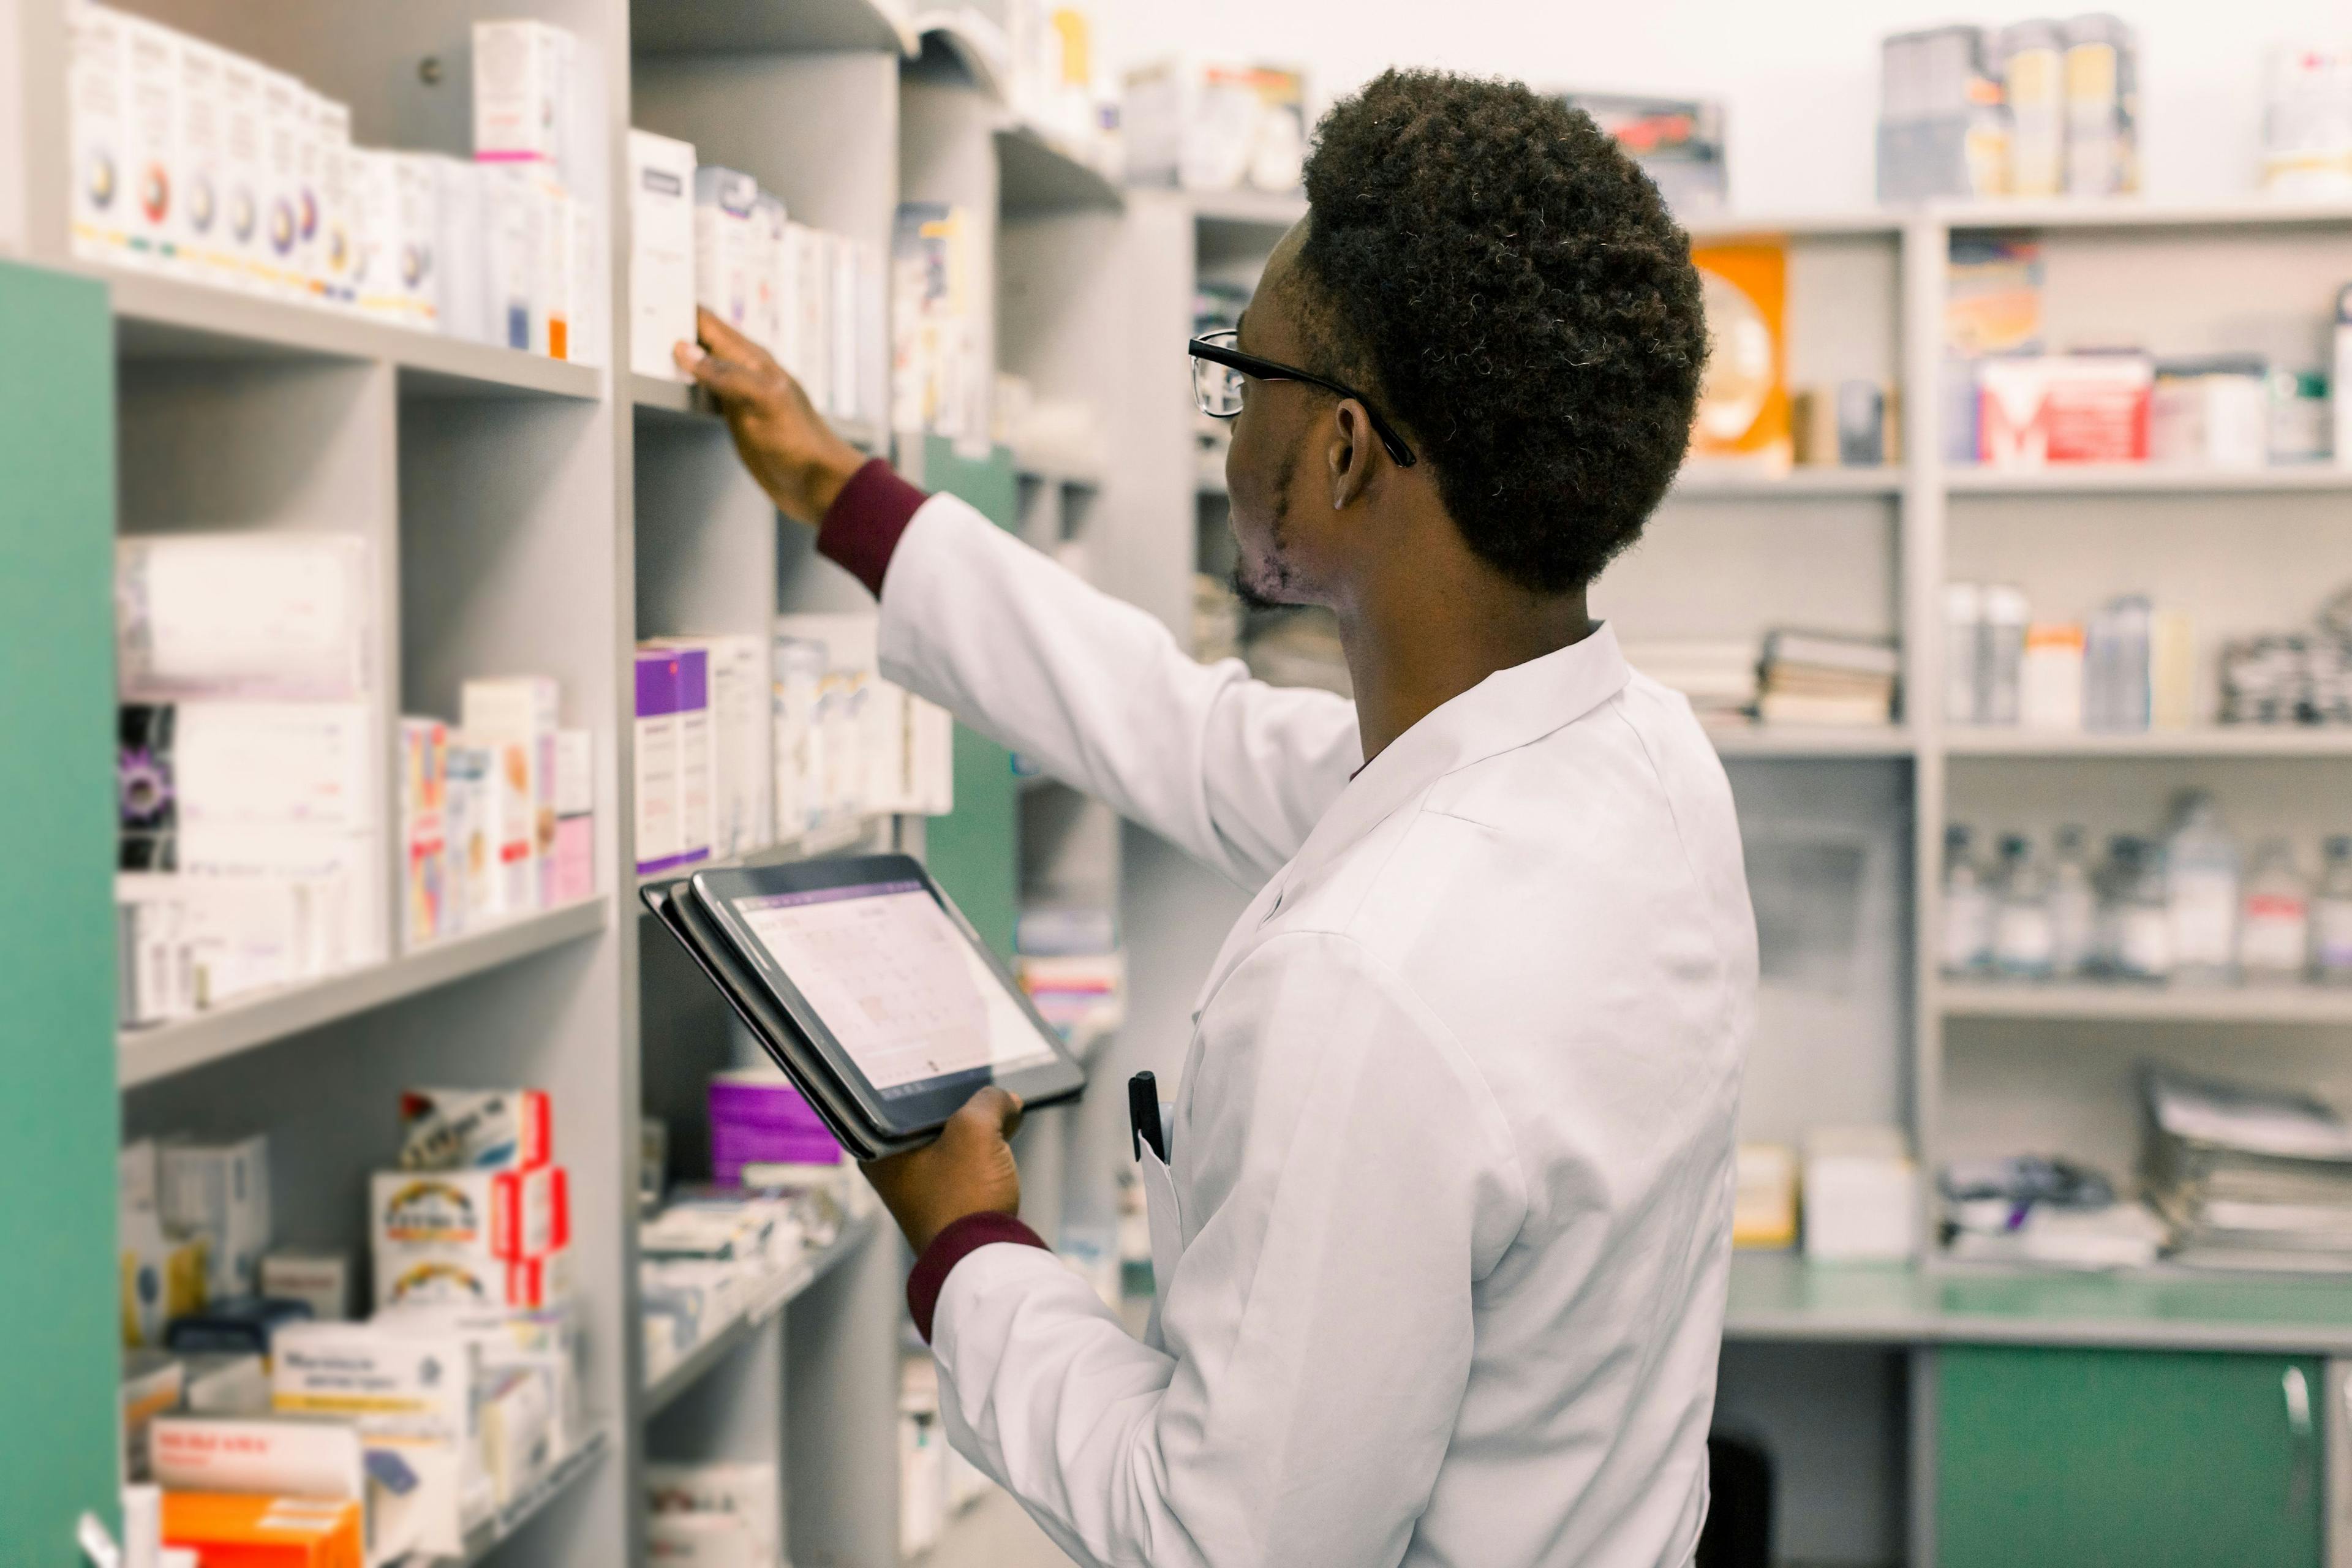 Male pharmacist using digital tablet during inventory in pharmacy | Image Credit: sofiko14 - stock.adobe.com